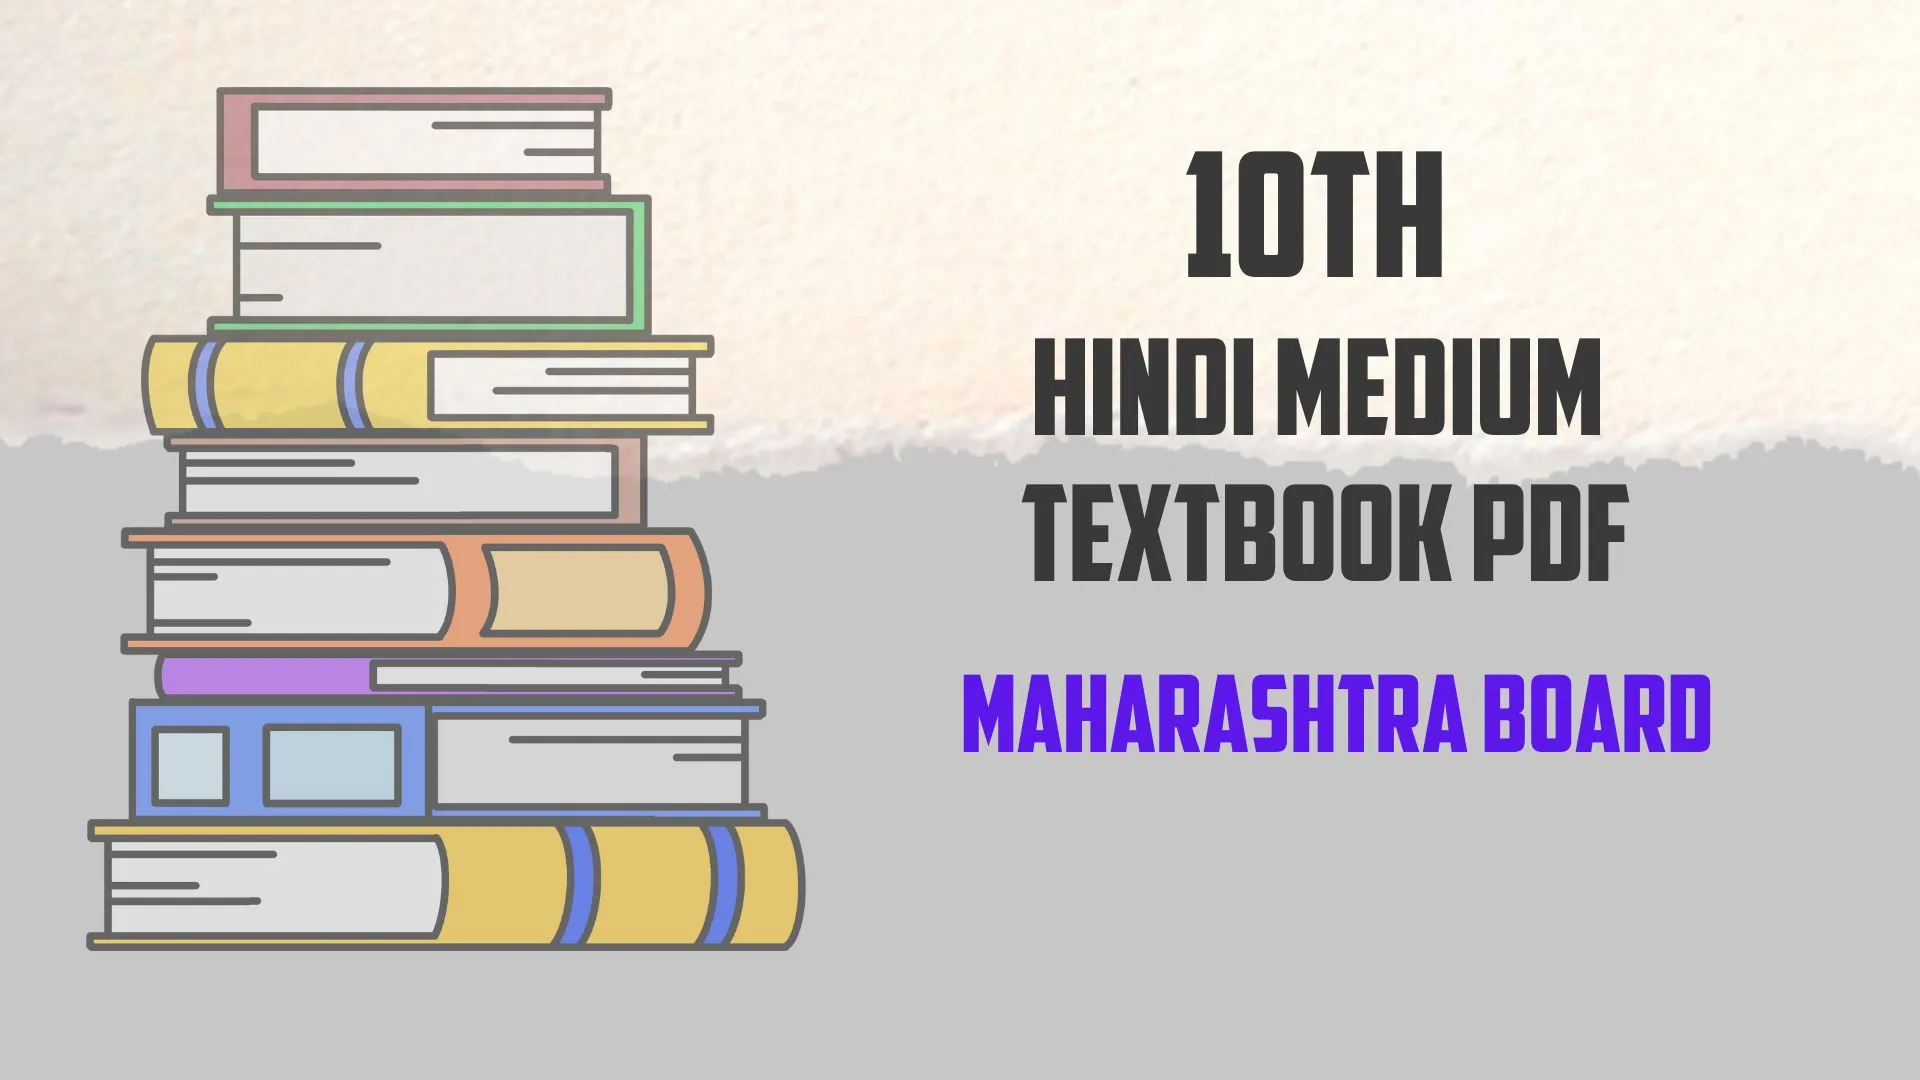 10th Hindi Medium Textbook pdf